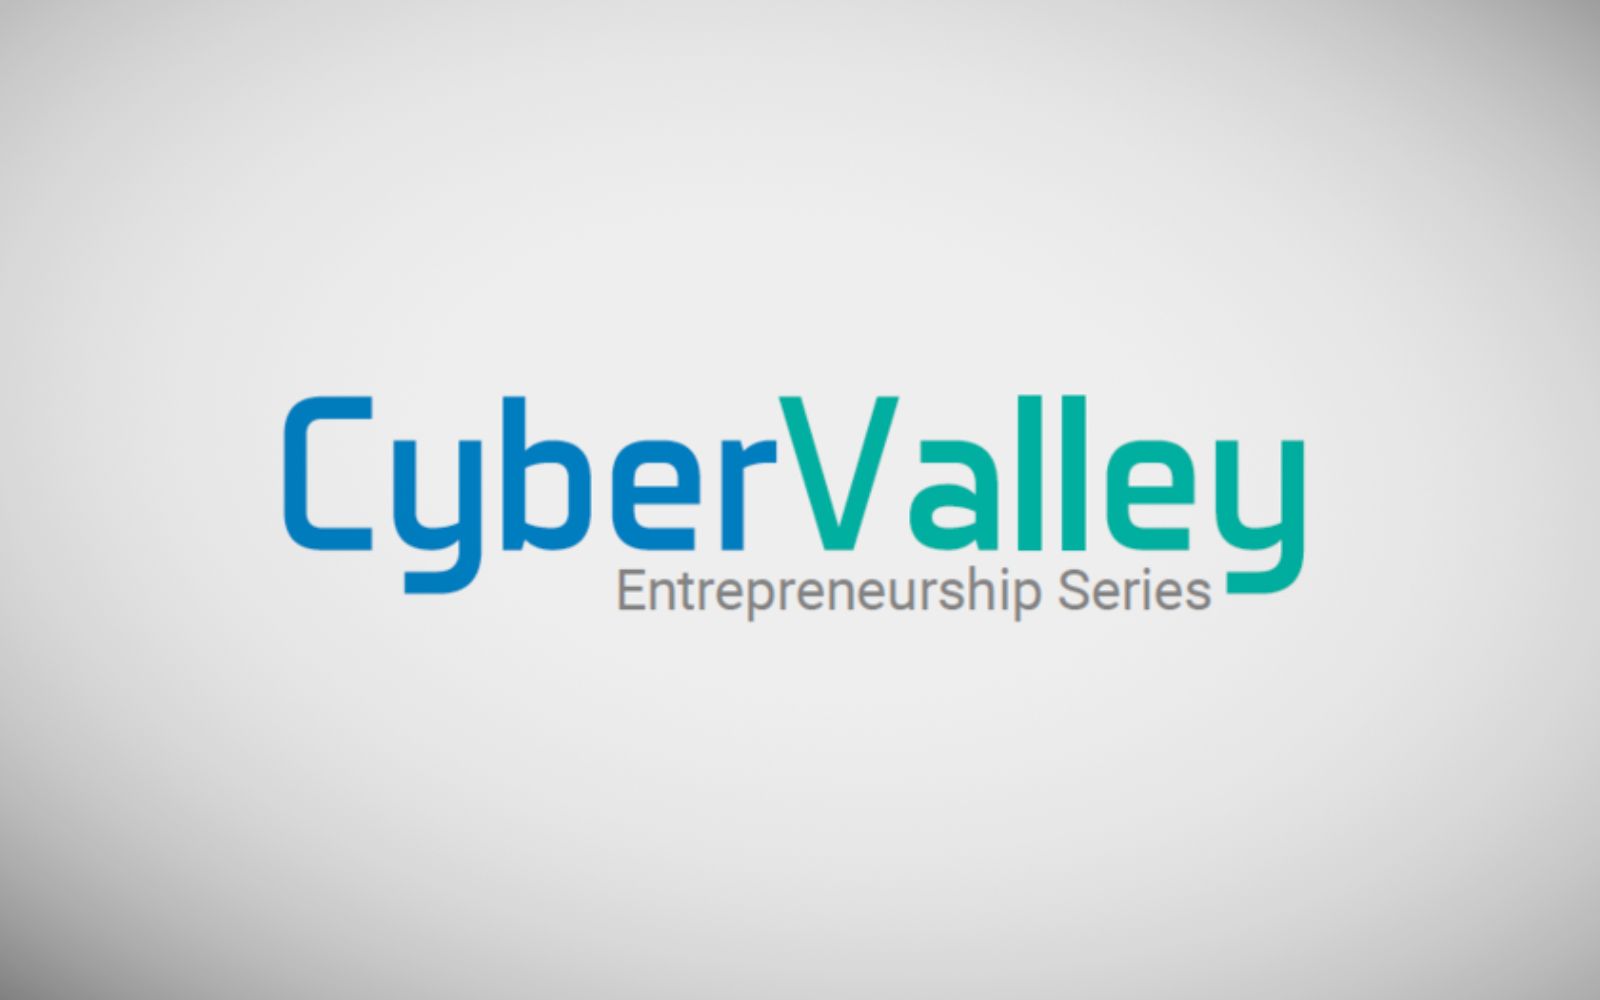 Textual logo of Entrepreneurship Series by Cyber Valley.